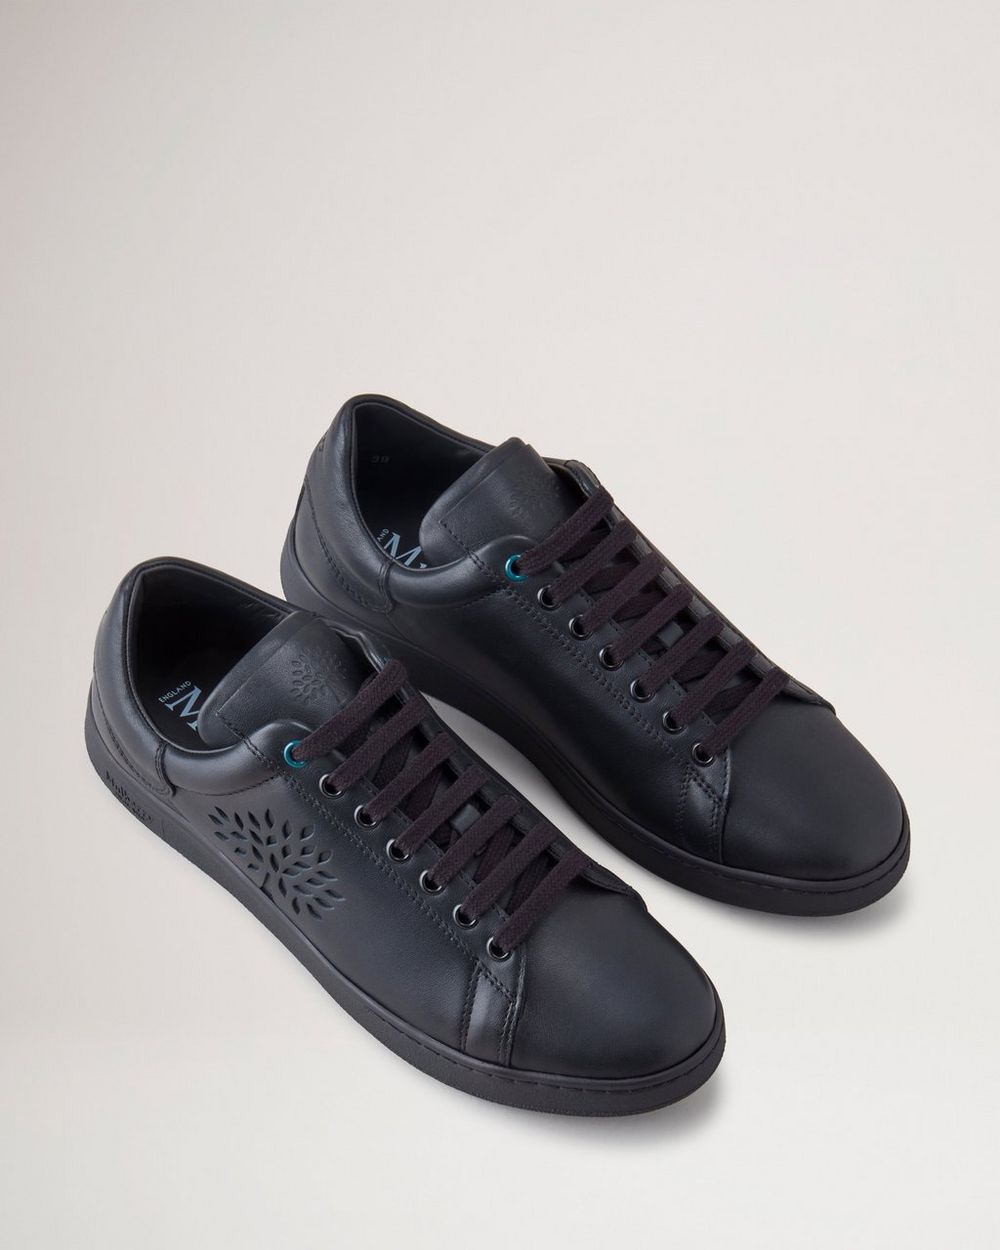 LOUIS VUITTON women's black leather sneakers | Size 38 / US 7.5 (25 cm /  9.8 in)